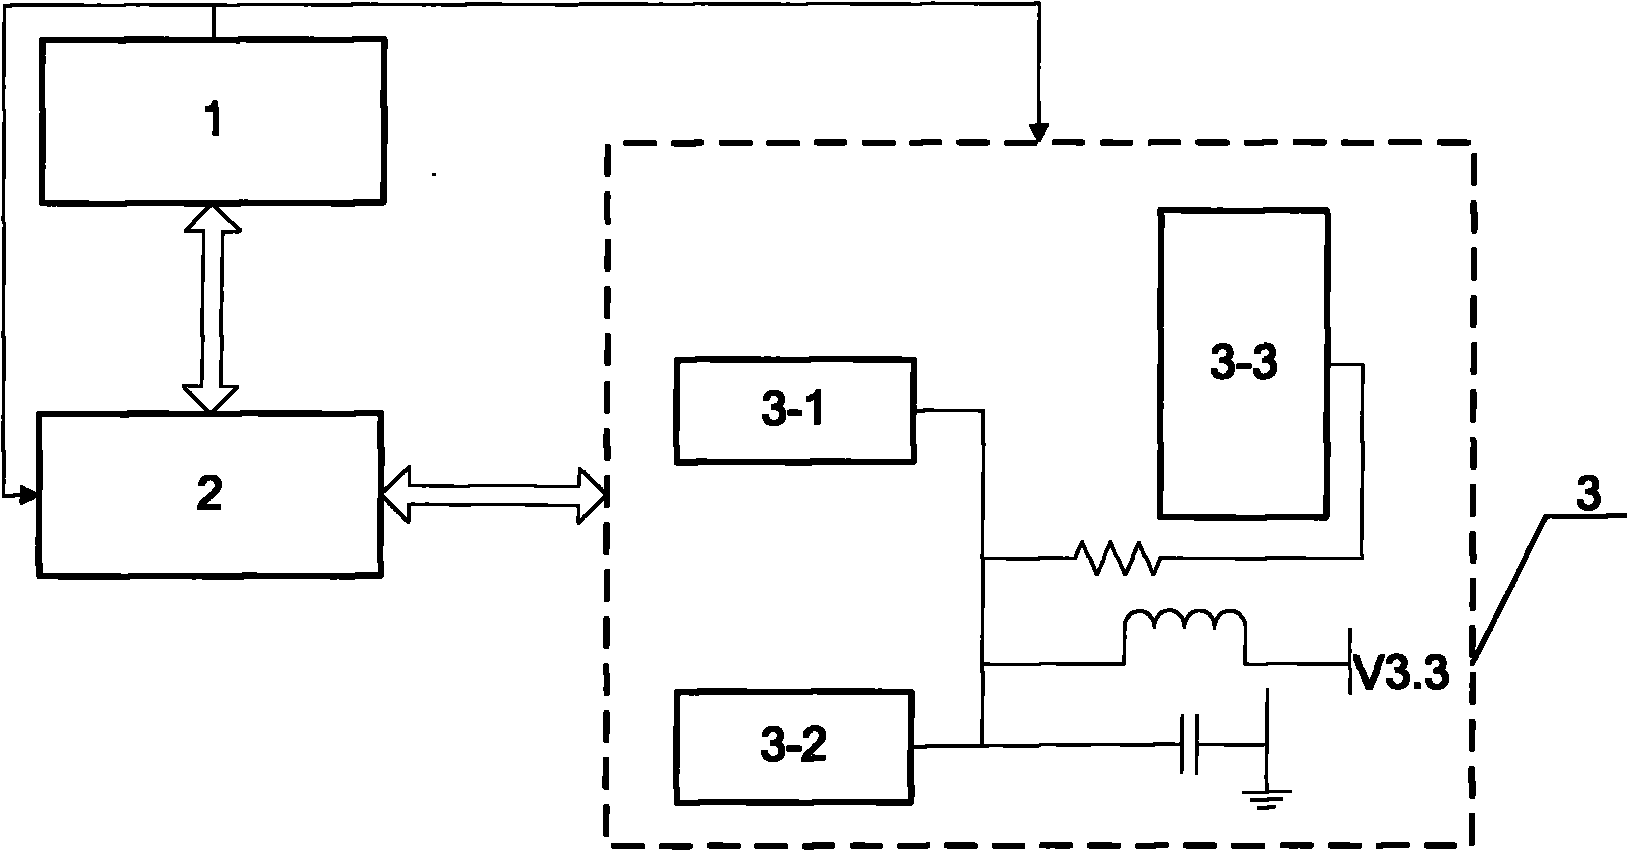 City street-lamp node control method